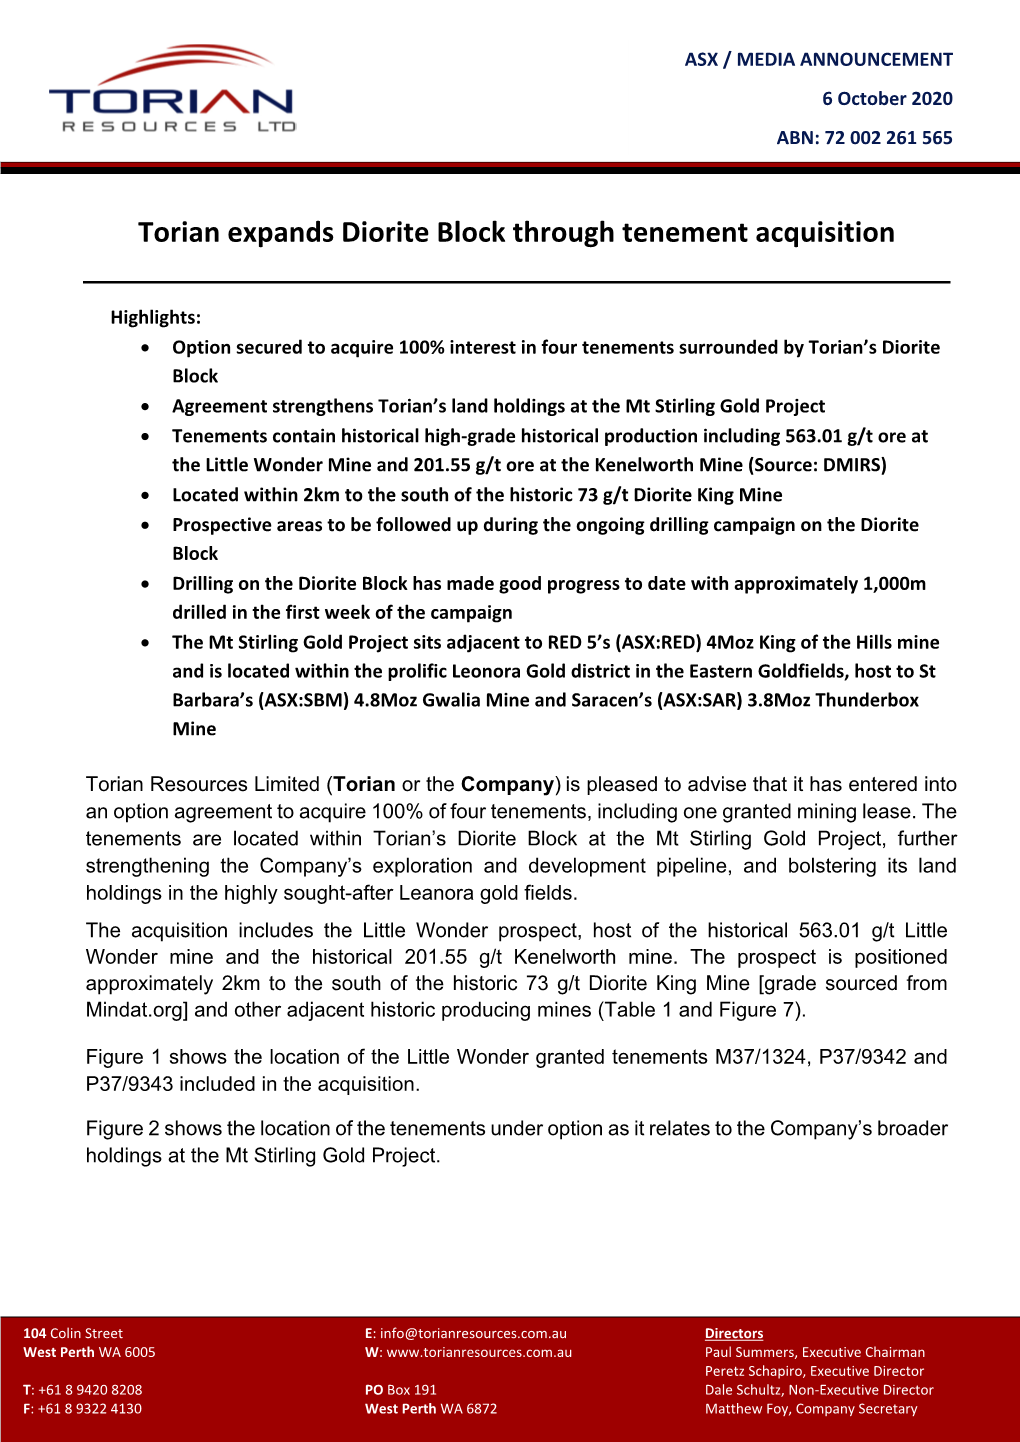 Torian Expands Diorite Block Through Tenement Acquisition